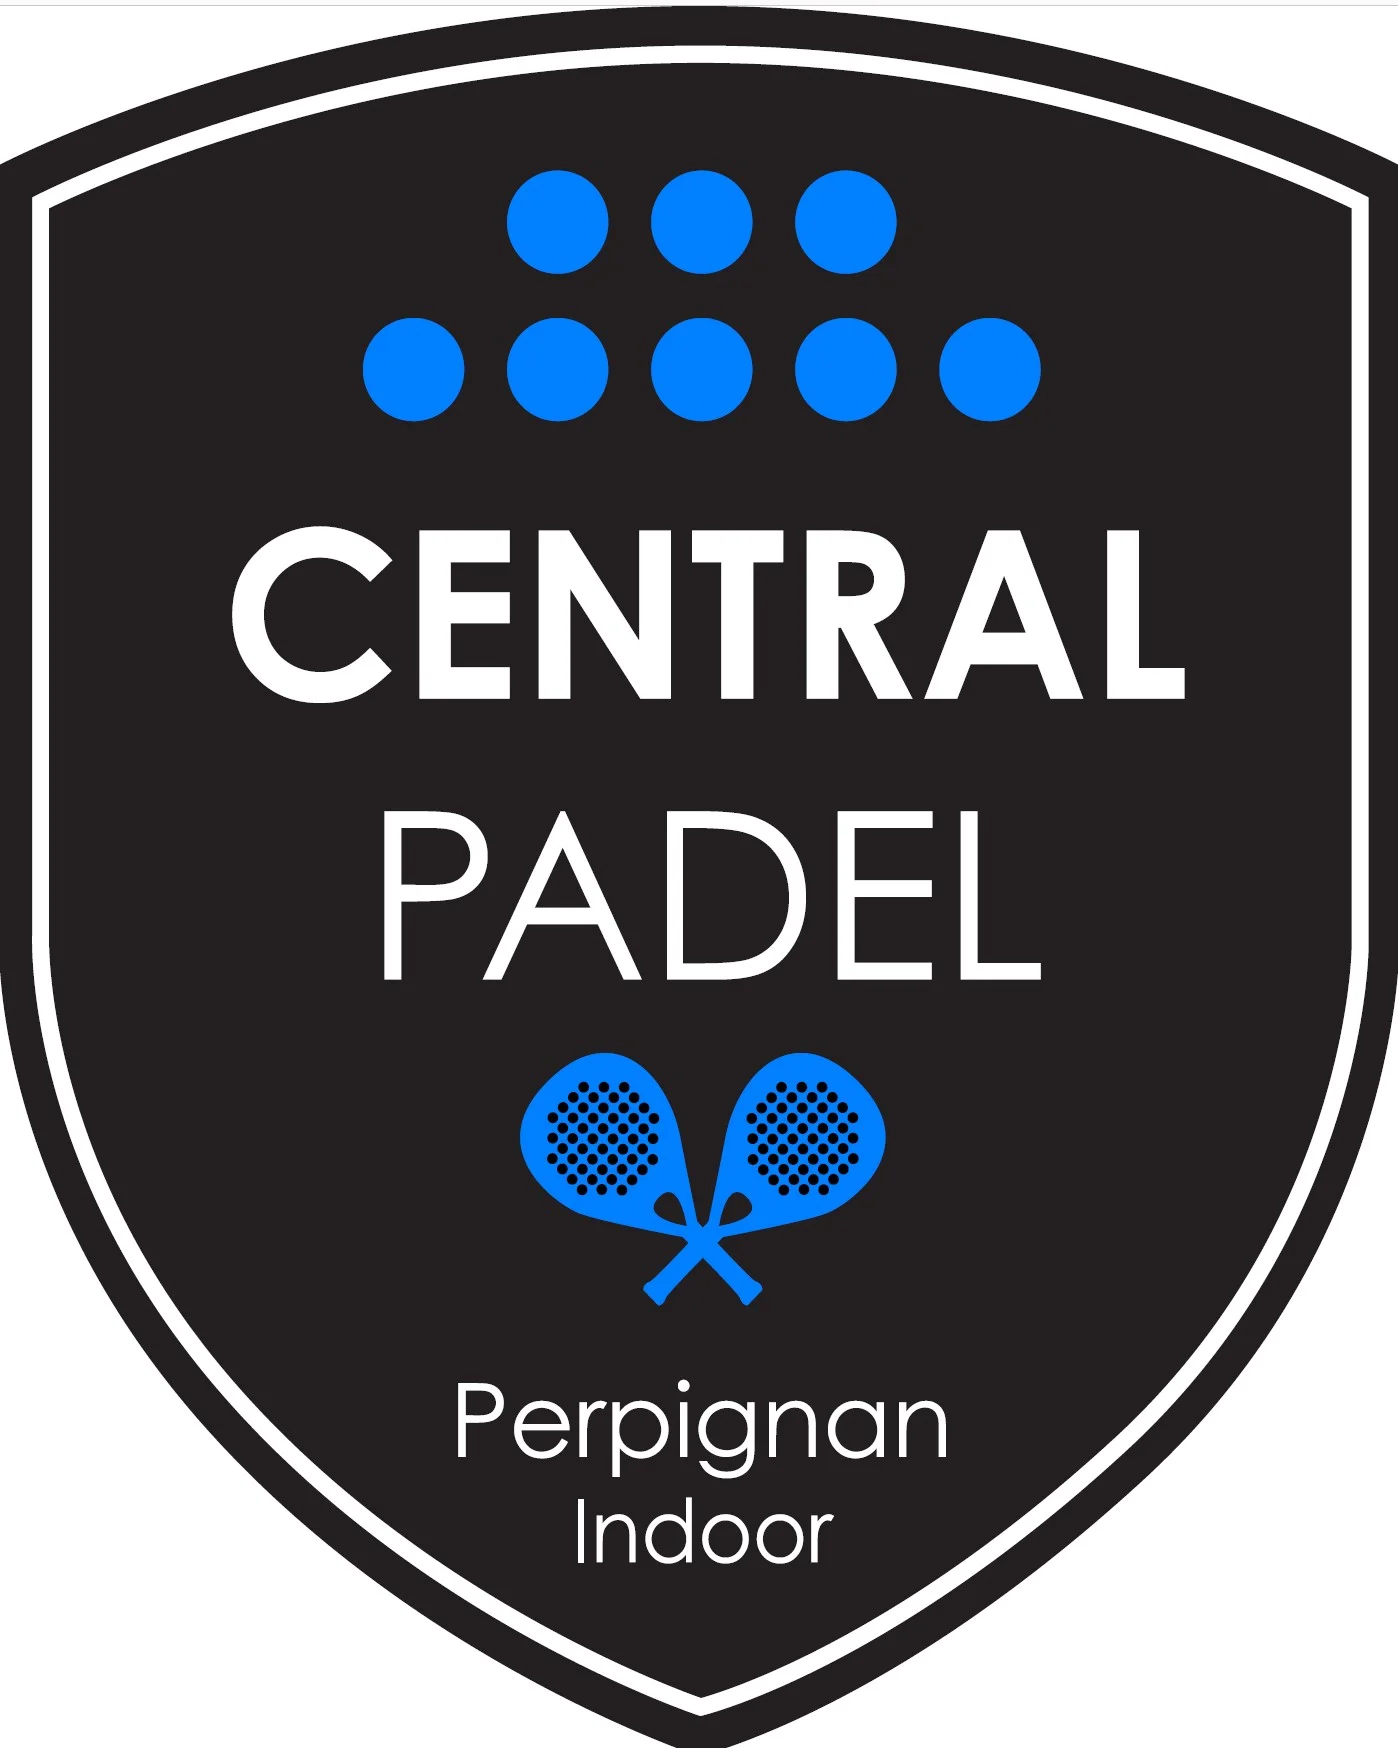 Centraal logo padel perpignan